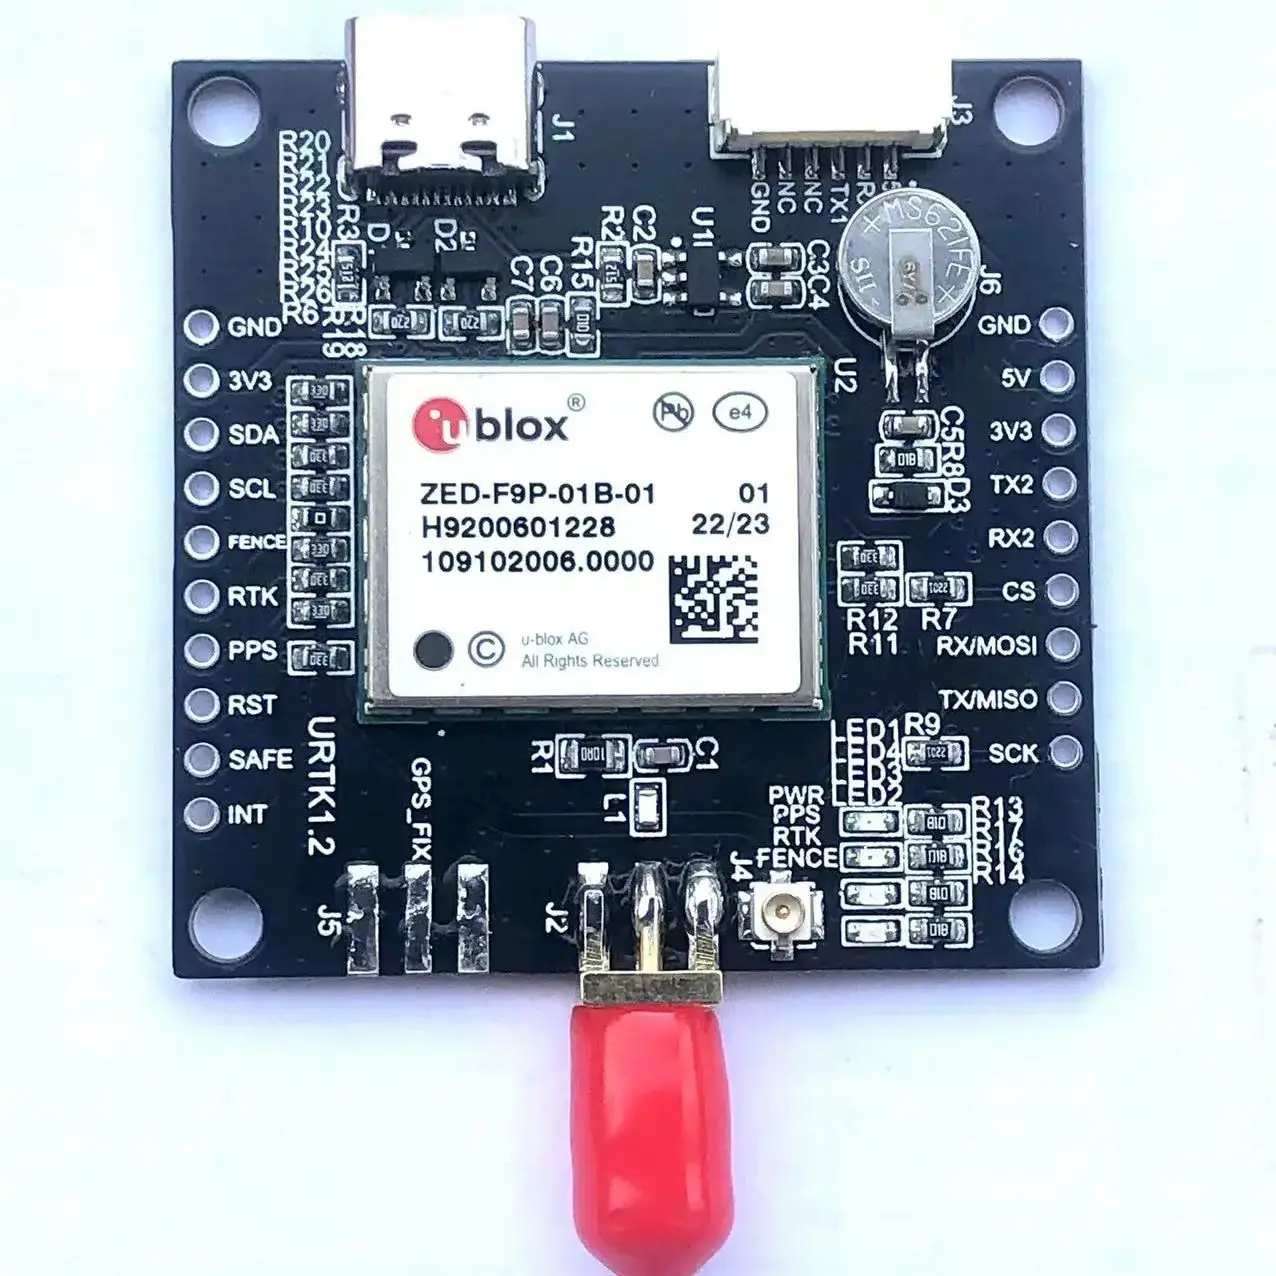 ZED-F9P-01B-01 RTK diferențial cm-nivel de poziționare modul de navigare GPS module noi de aprovizionare receptor UM980 GNSS bord - 0